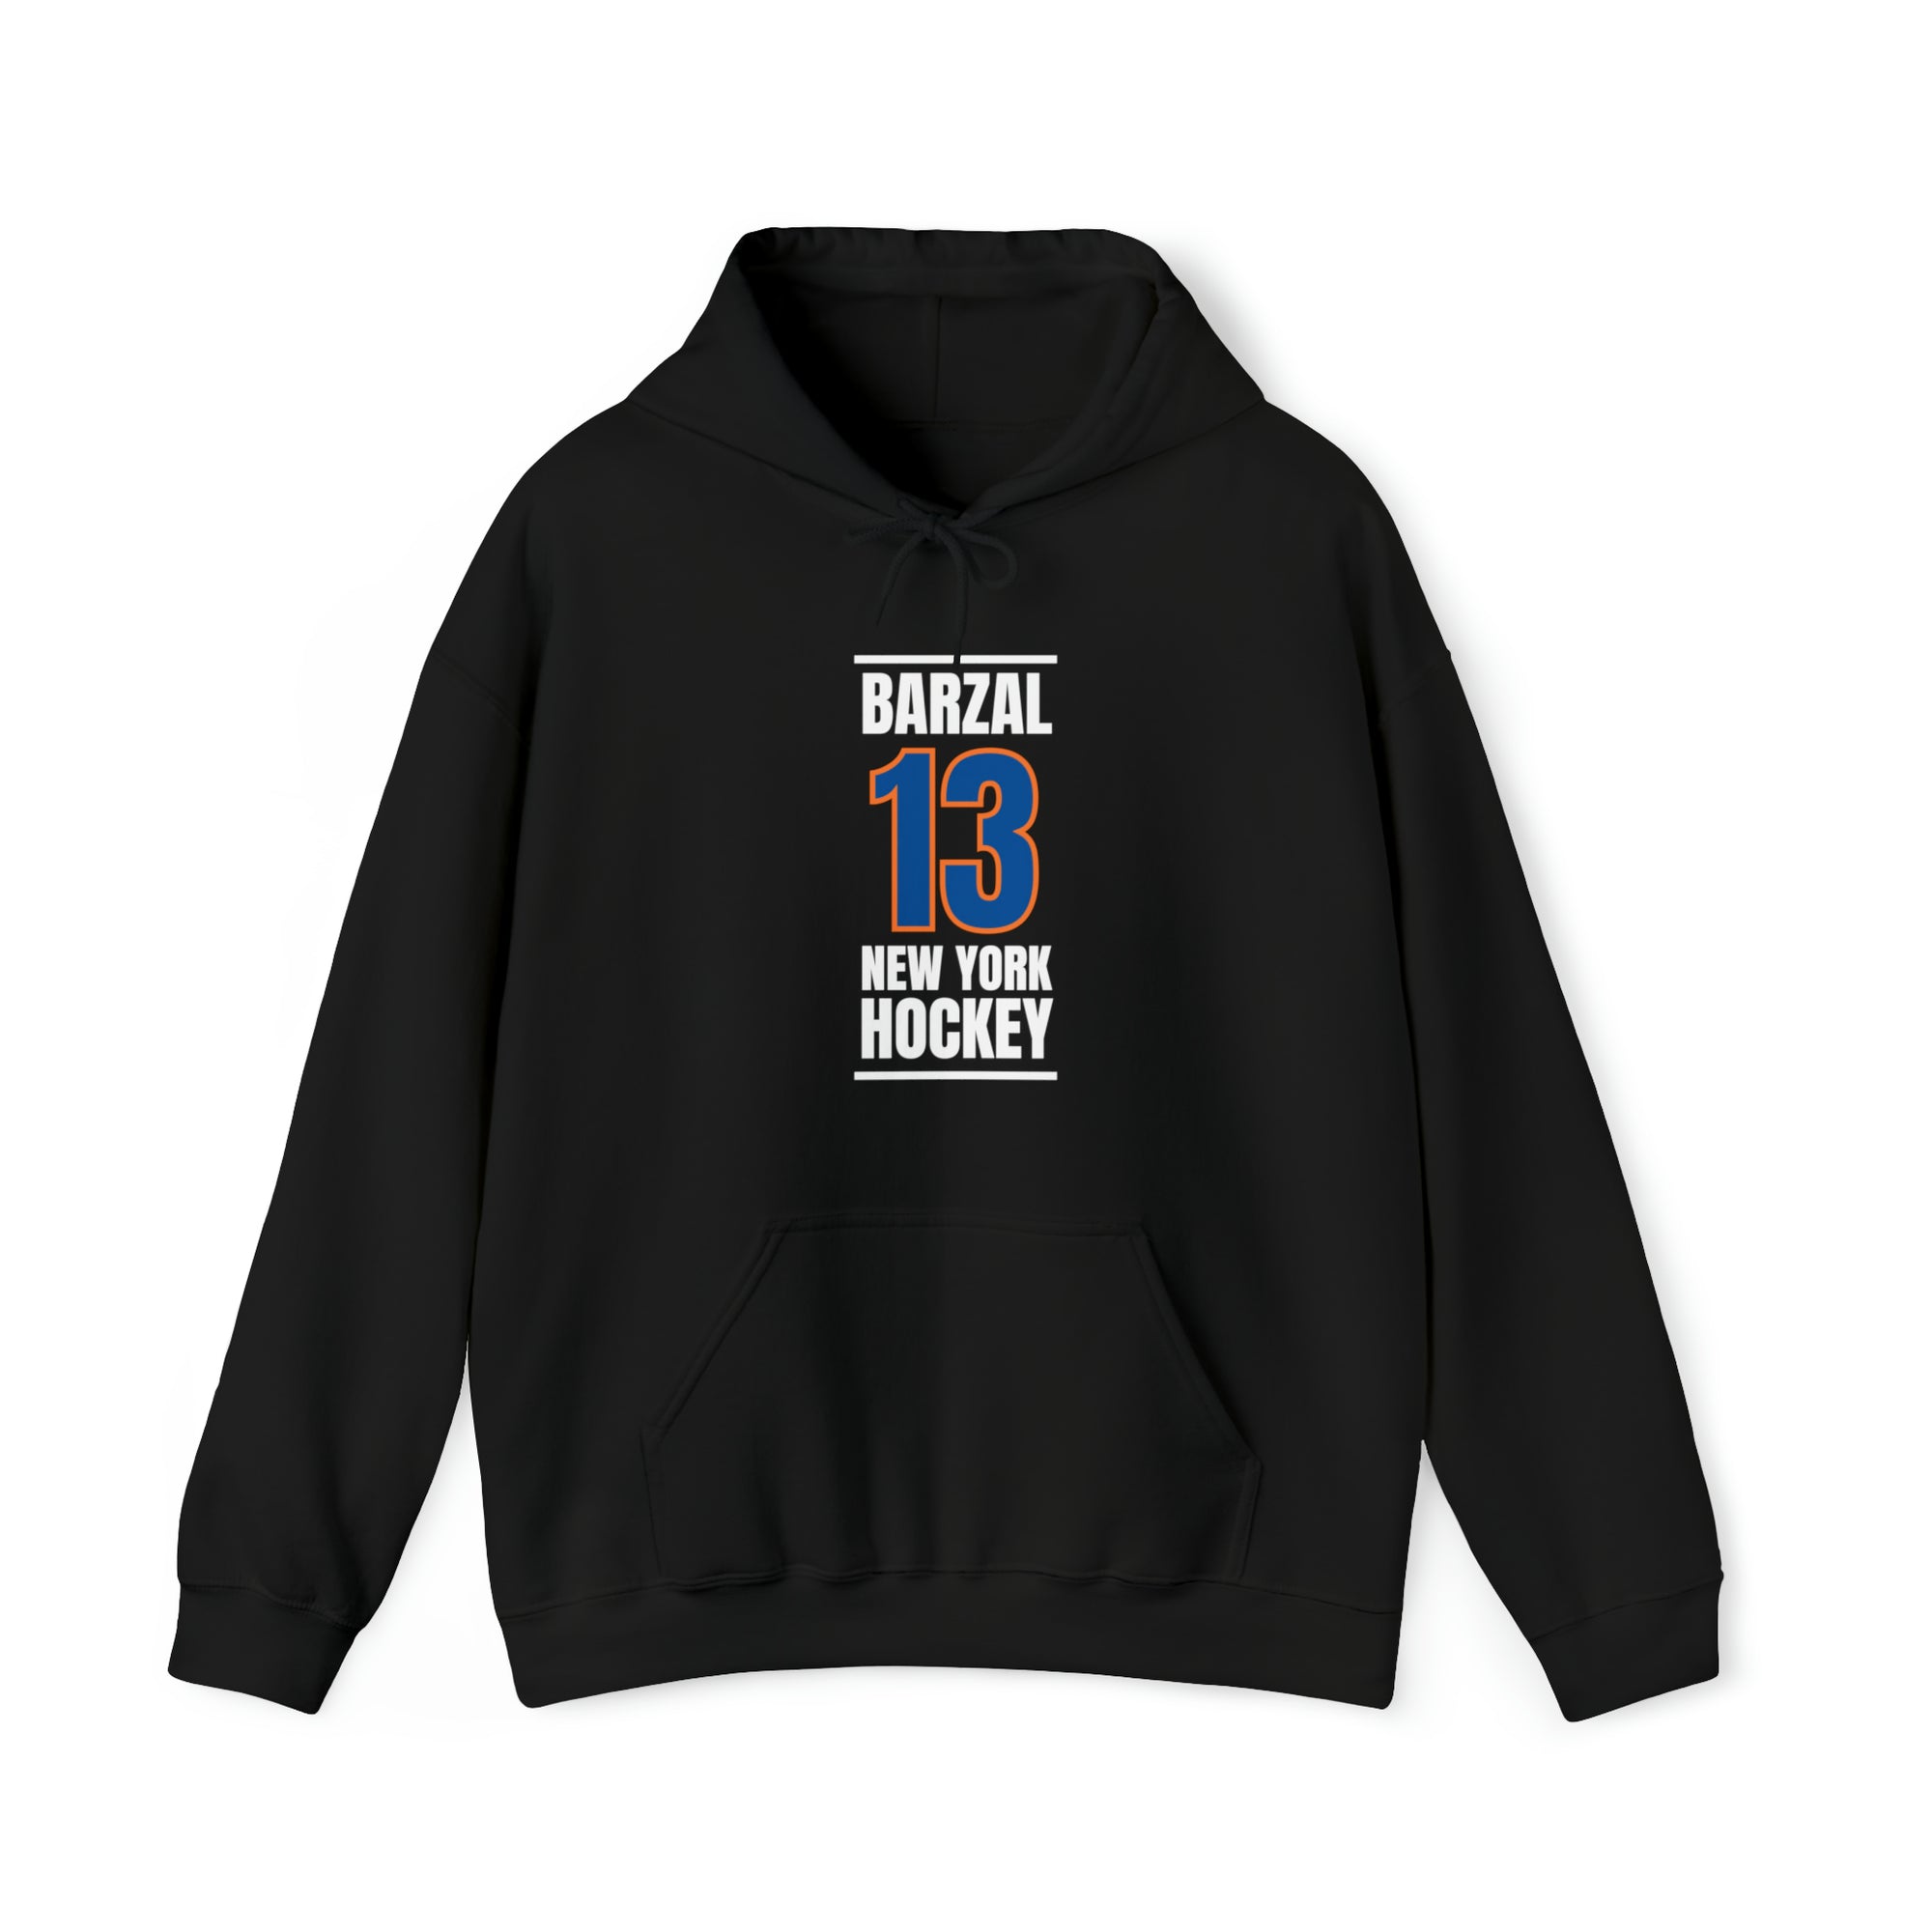 Barzal 13 New York Hockey Blue Vertical Design Unisex Hooded Sweatshirt